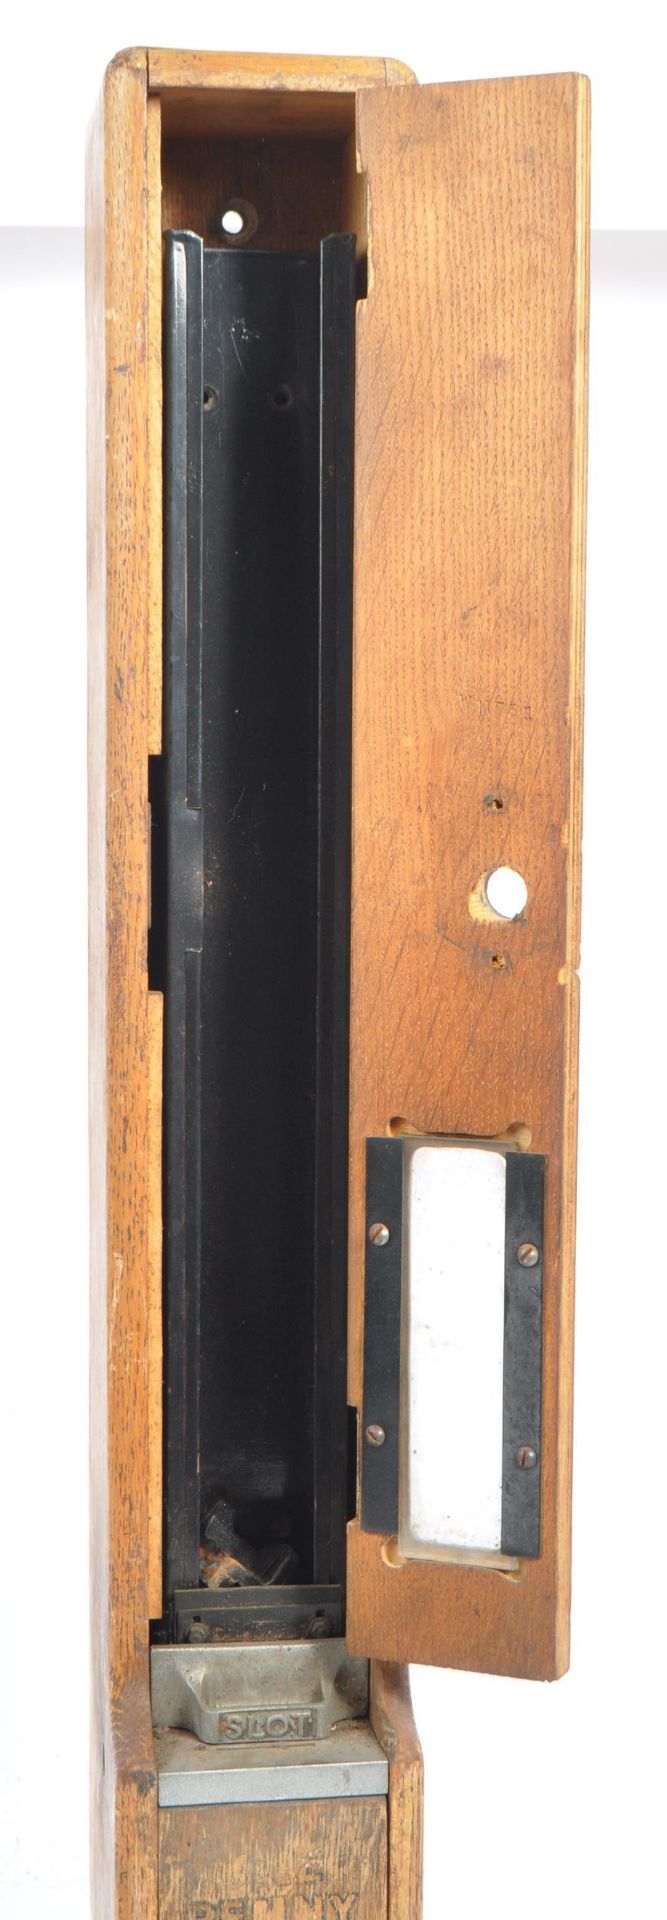 EARLY 20TH CENTURY OAK WALL MOUNTED MATCH BOX DISPENSER - Image 5 of 8